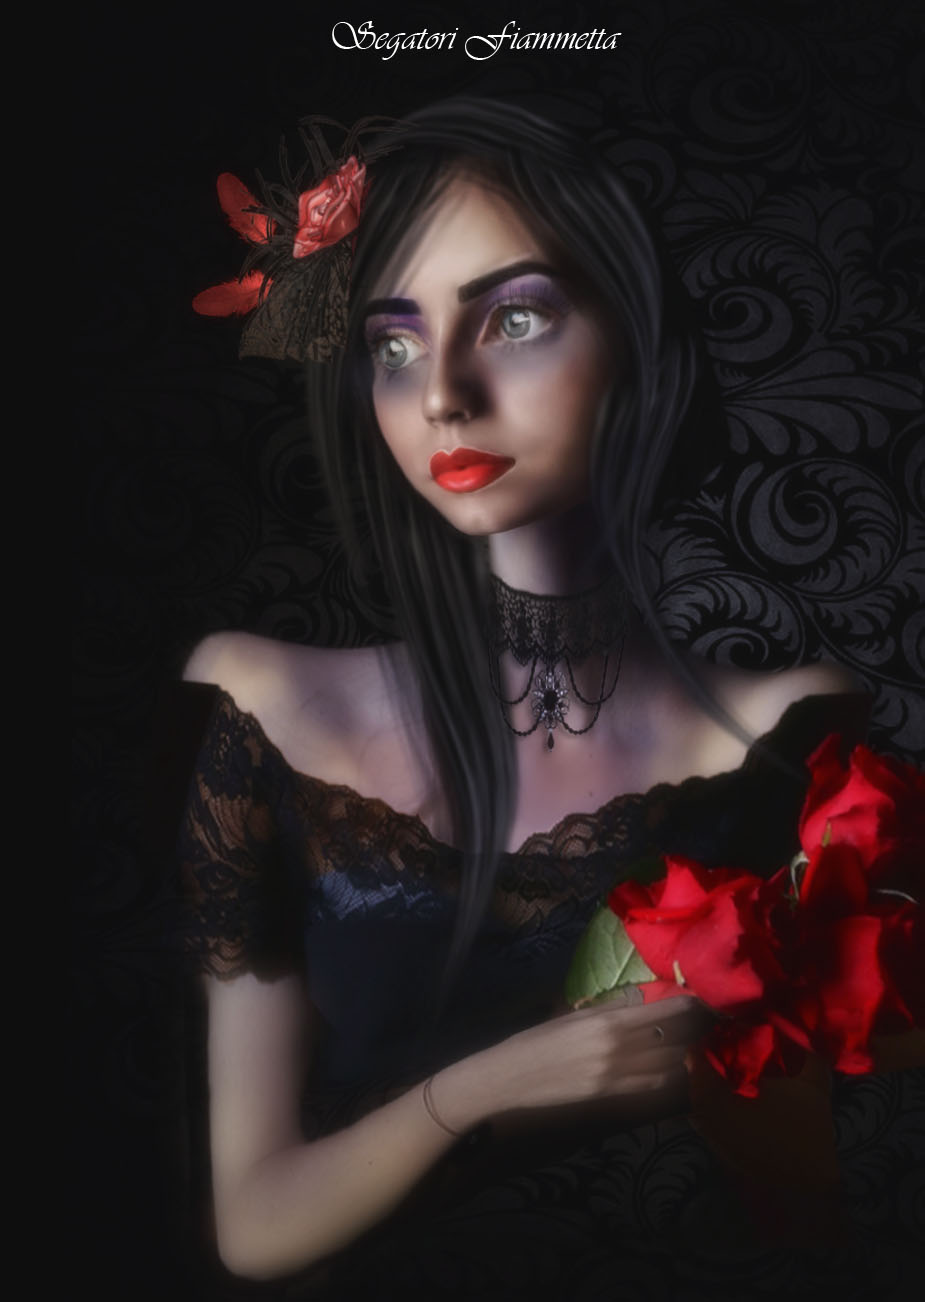 Фото Девушка с красными розами, by Fiammetta62